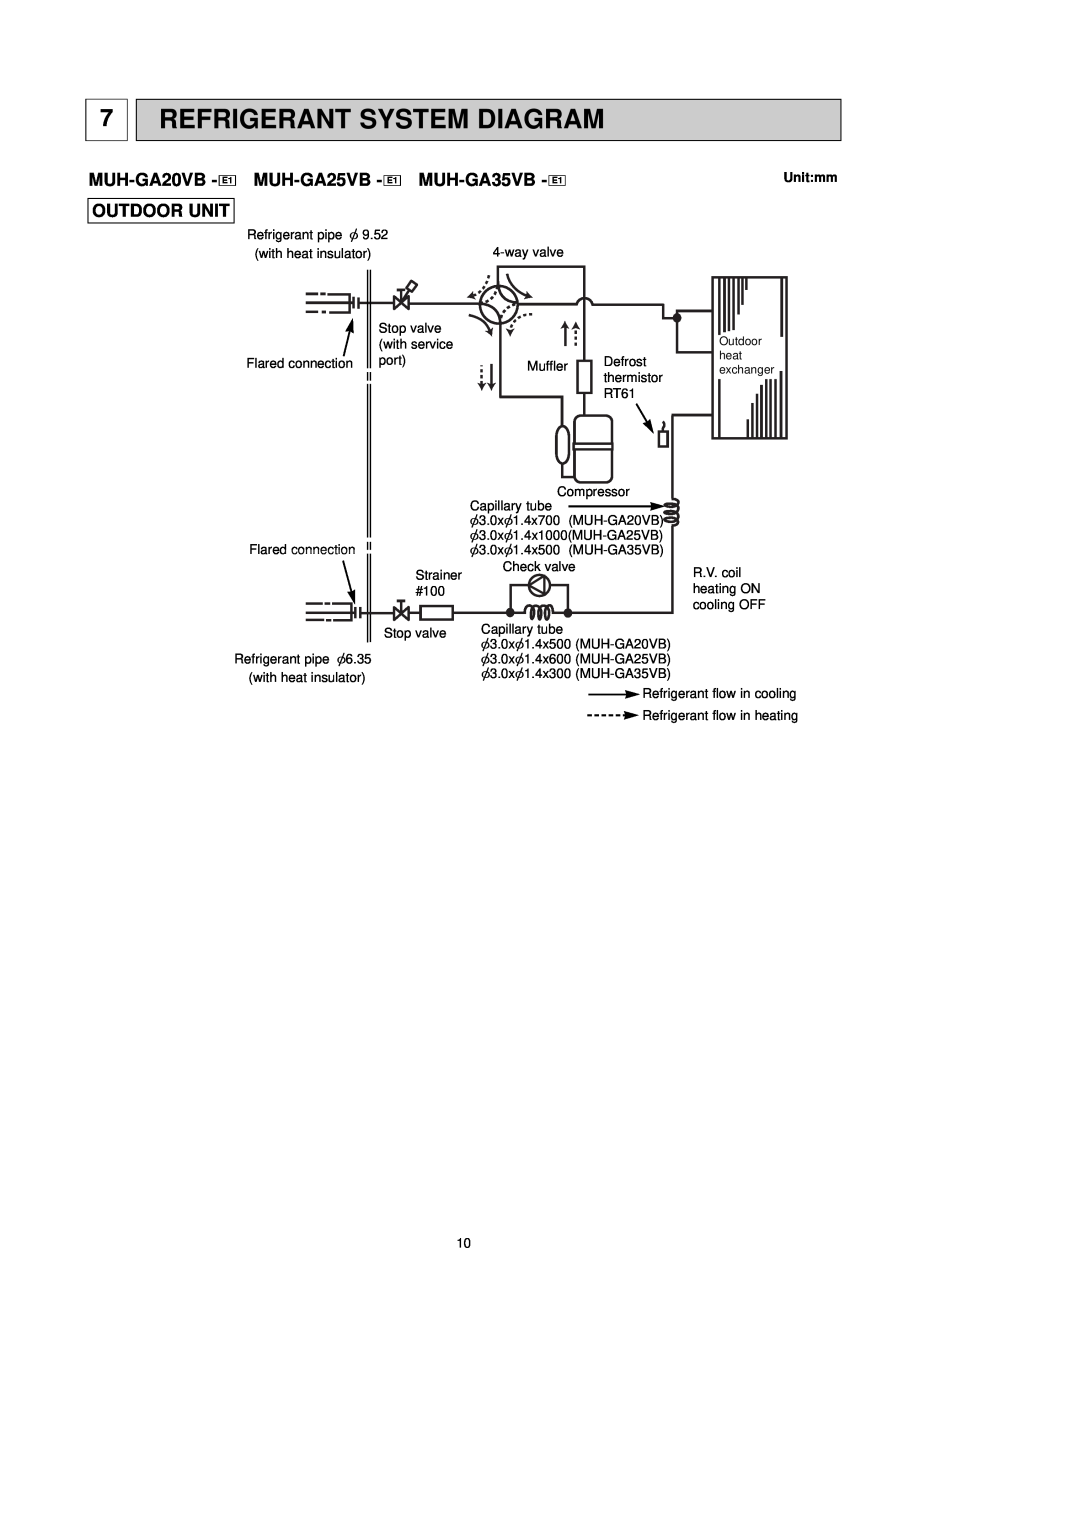 Pioneer service manual Refrigerant System Diagram, MUH-GA20VB- E1 OUTDOOR UNIT, MUH-GA25VB- E1 MUH-GA35VB- E1, Unit mm 